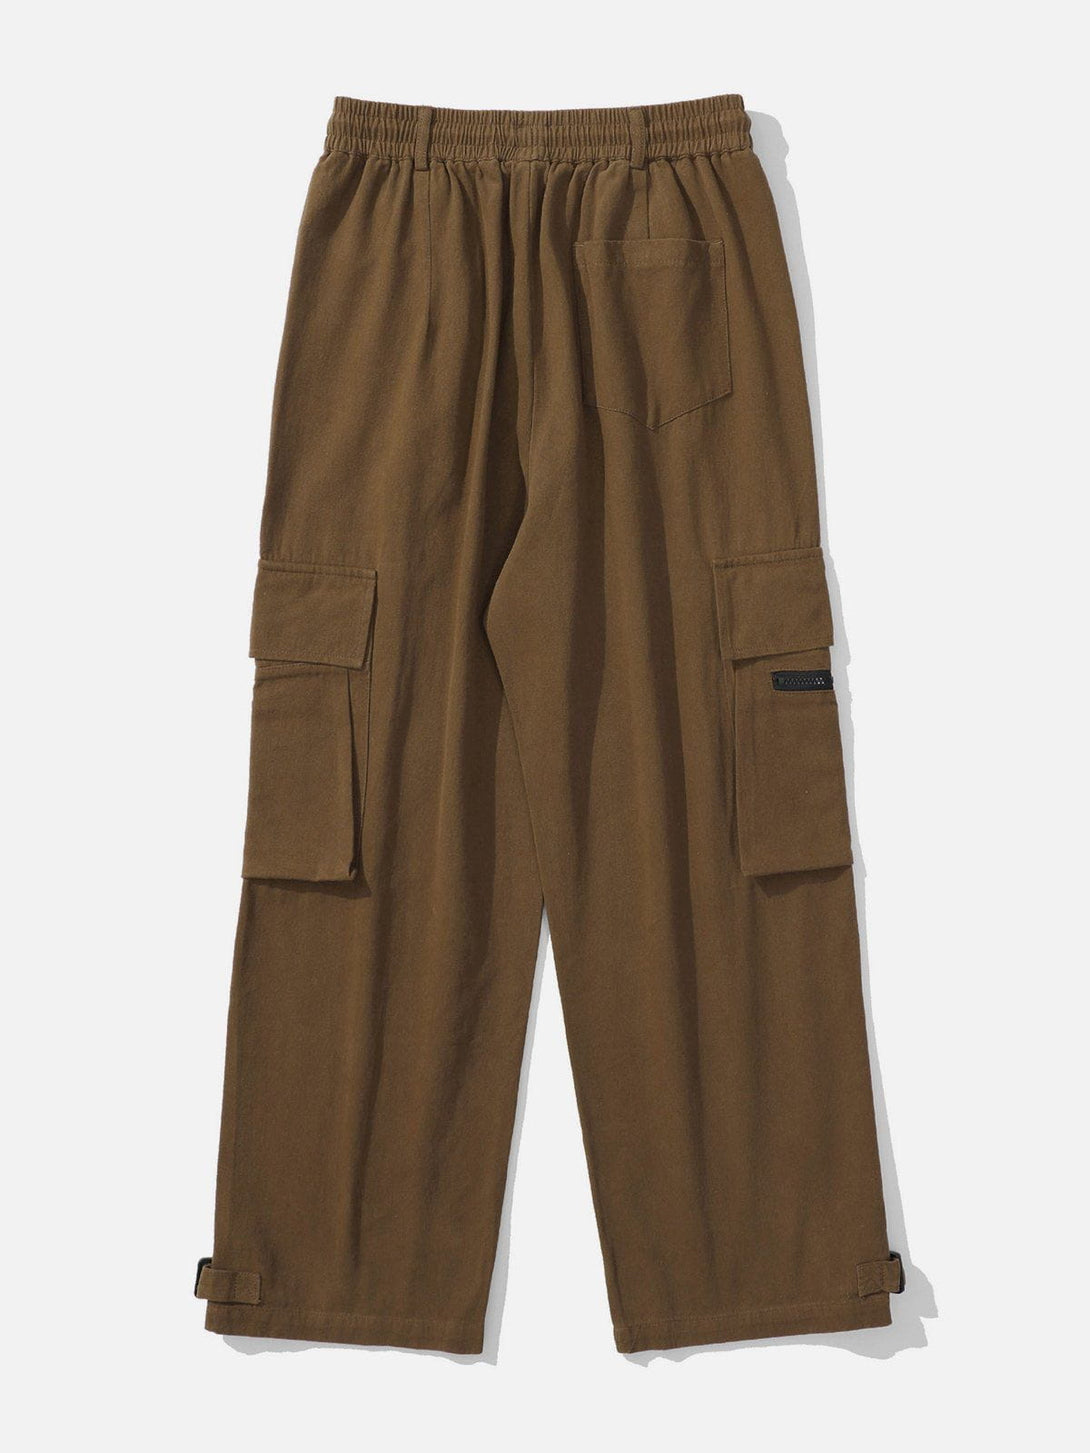 Majesda® - Solid Multi-Pocket Cargo Pants outfit ideas streetwear fashion